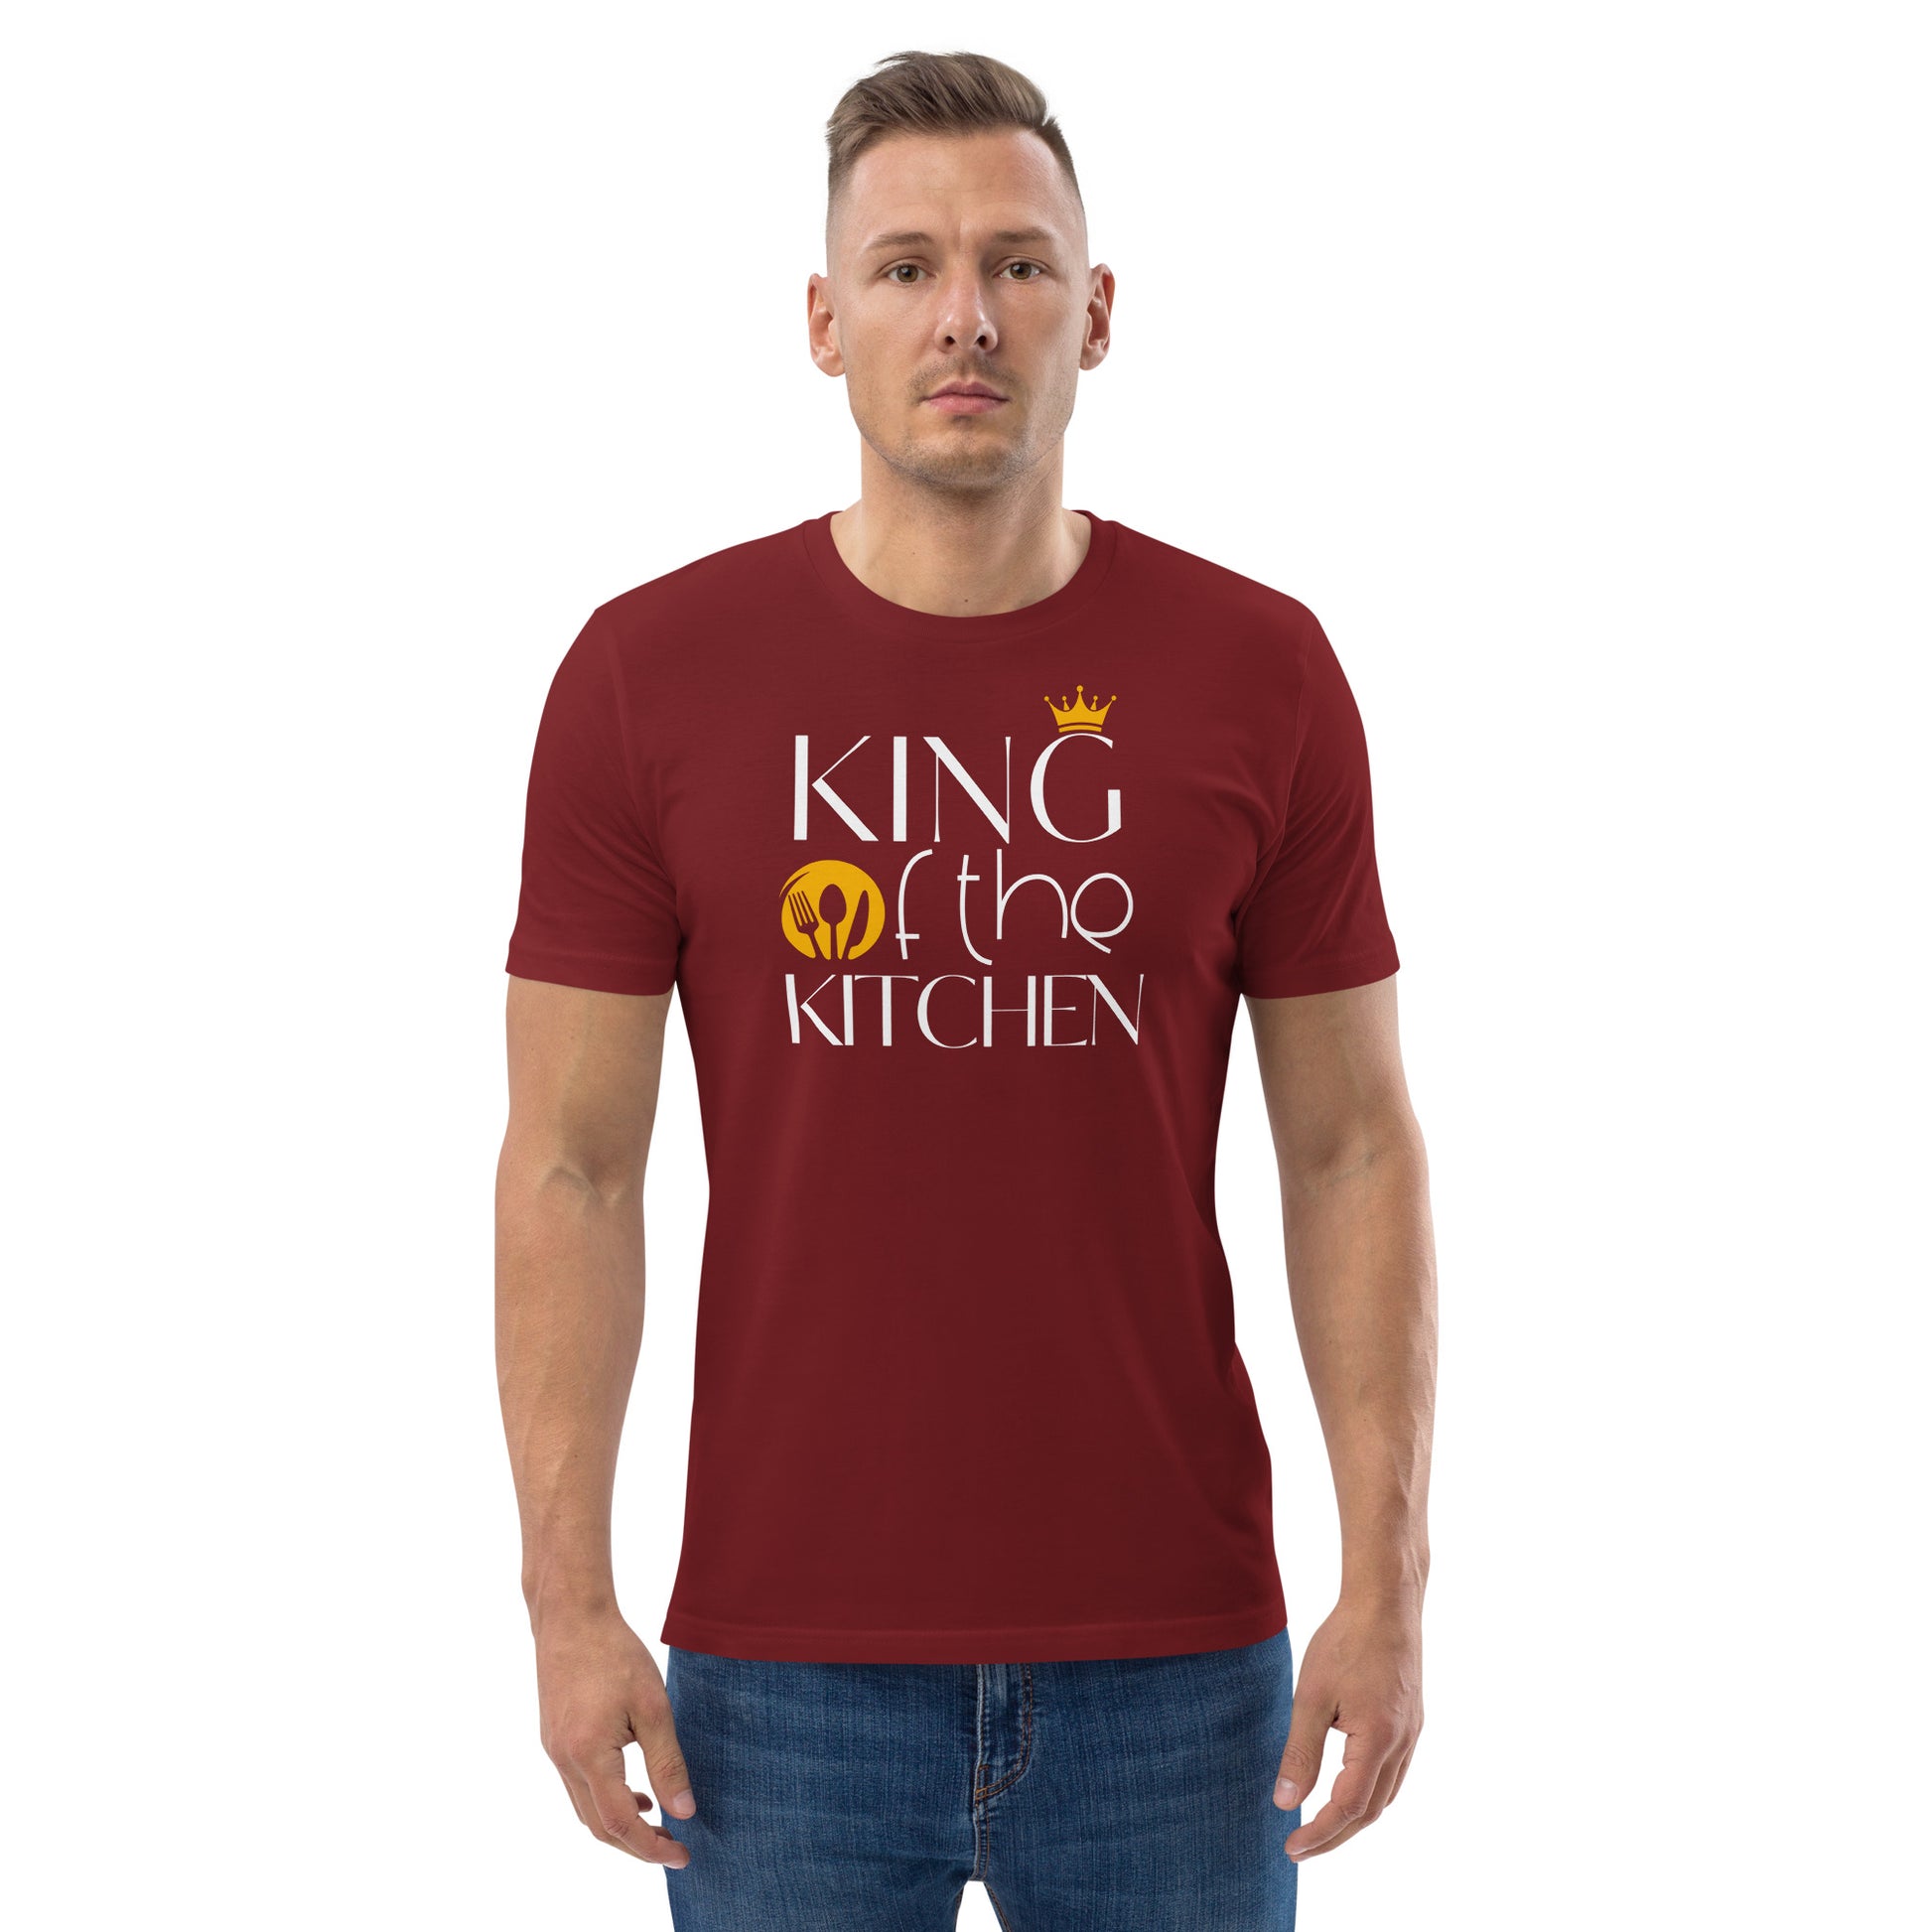 "King of the kitchen" custom made T-Shirt fpr Hobby Chefs, in burgundy